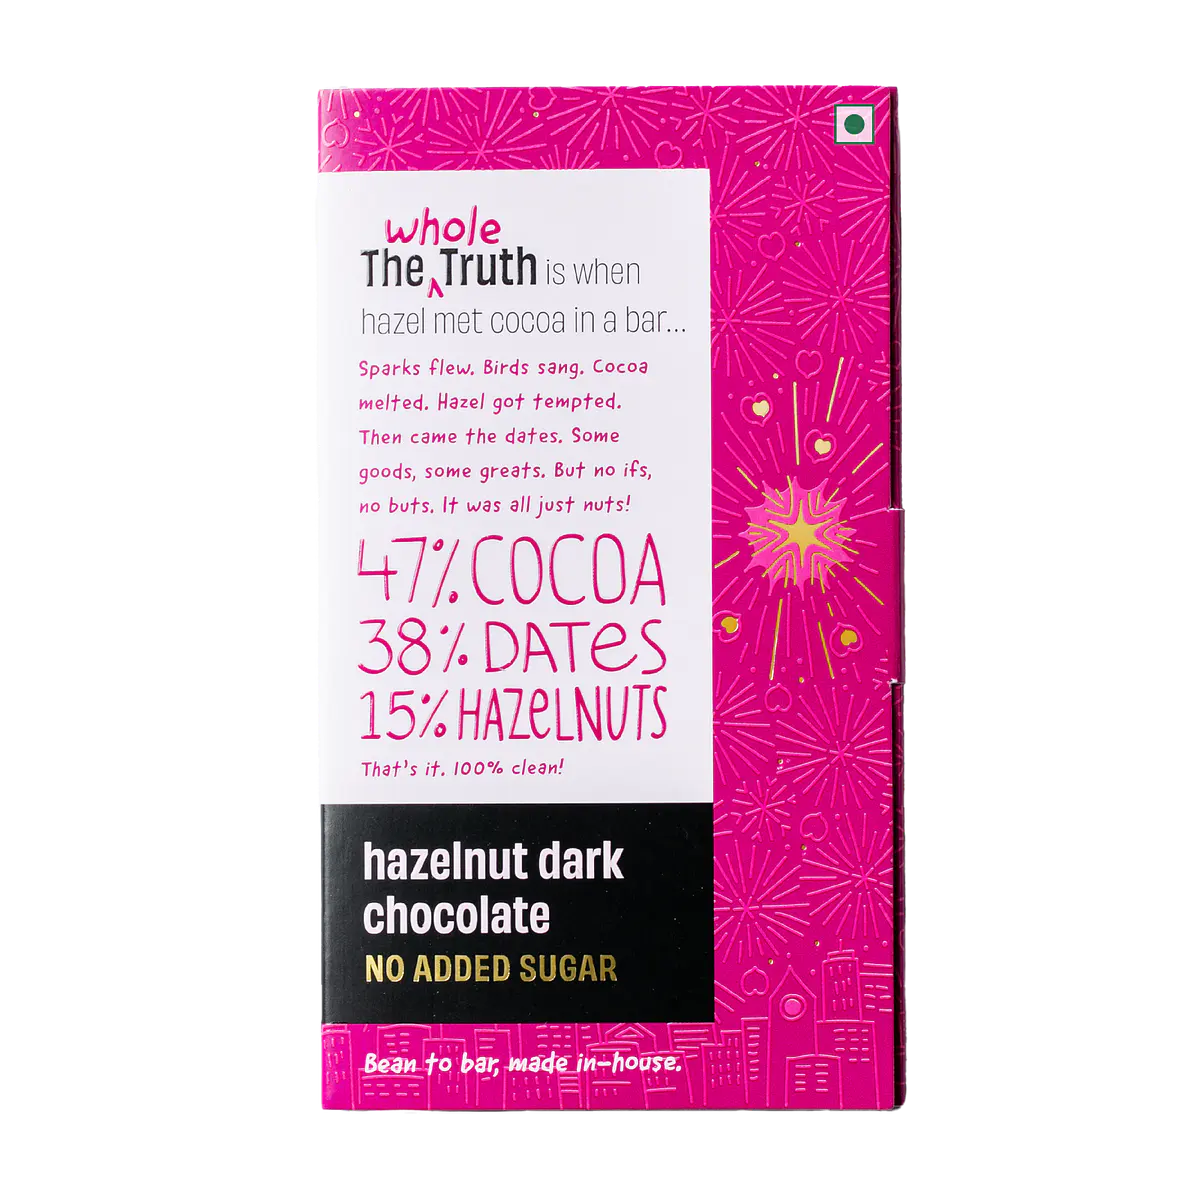 The Whole Truth Hazelnut Dark Chocolate Image